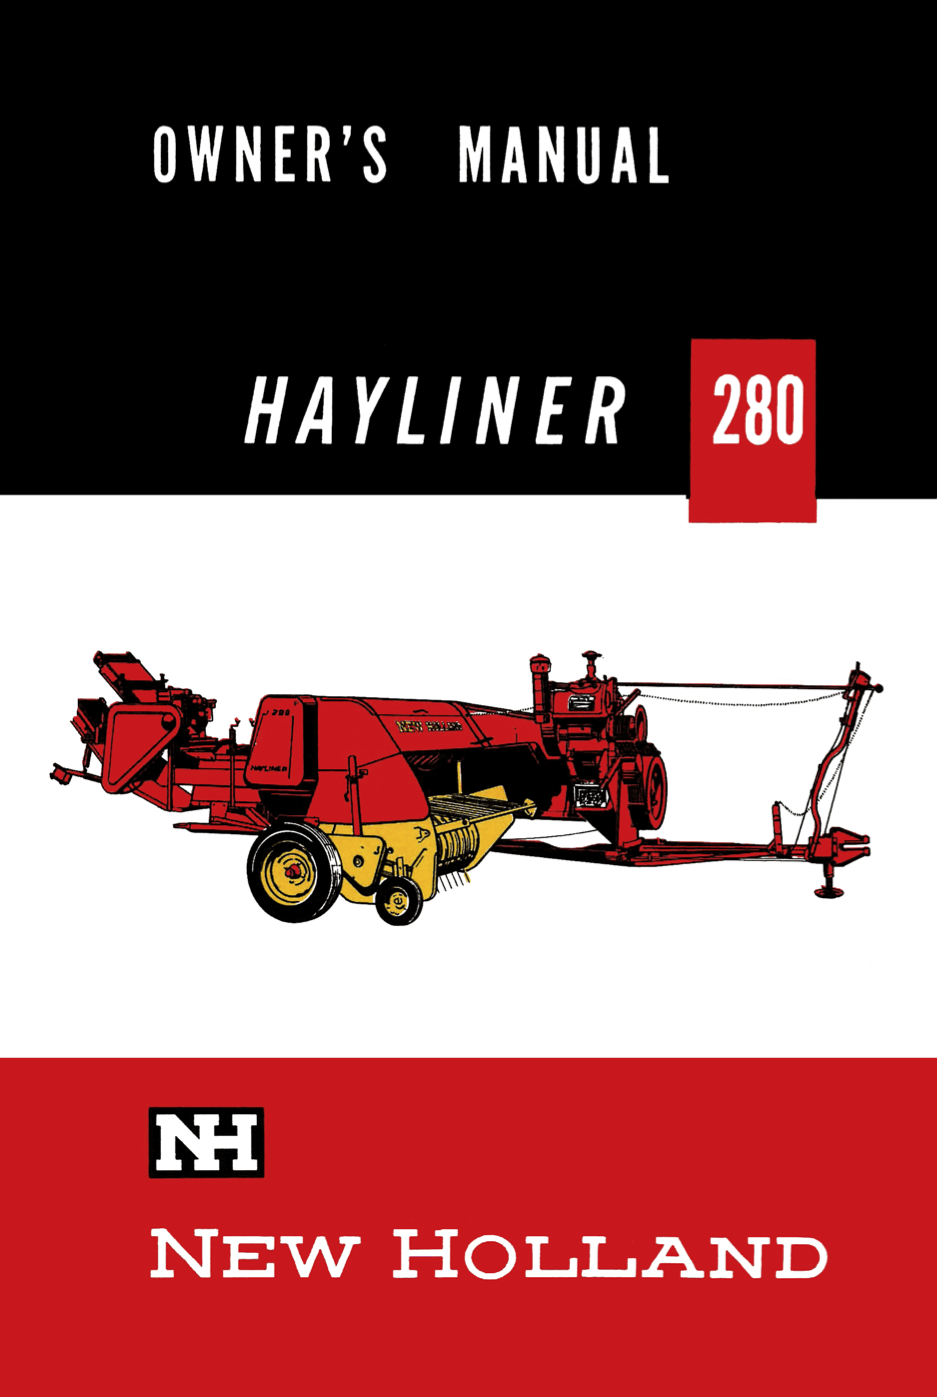 New Holland Hayliner 280 Balers - Owner's Manual - Ag Manuals - A Provider of Digital Farm Manuals - 1